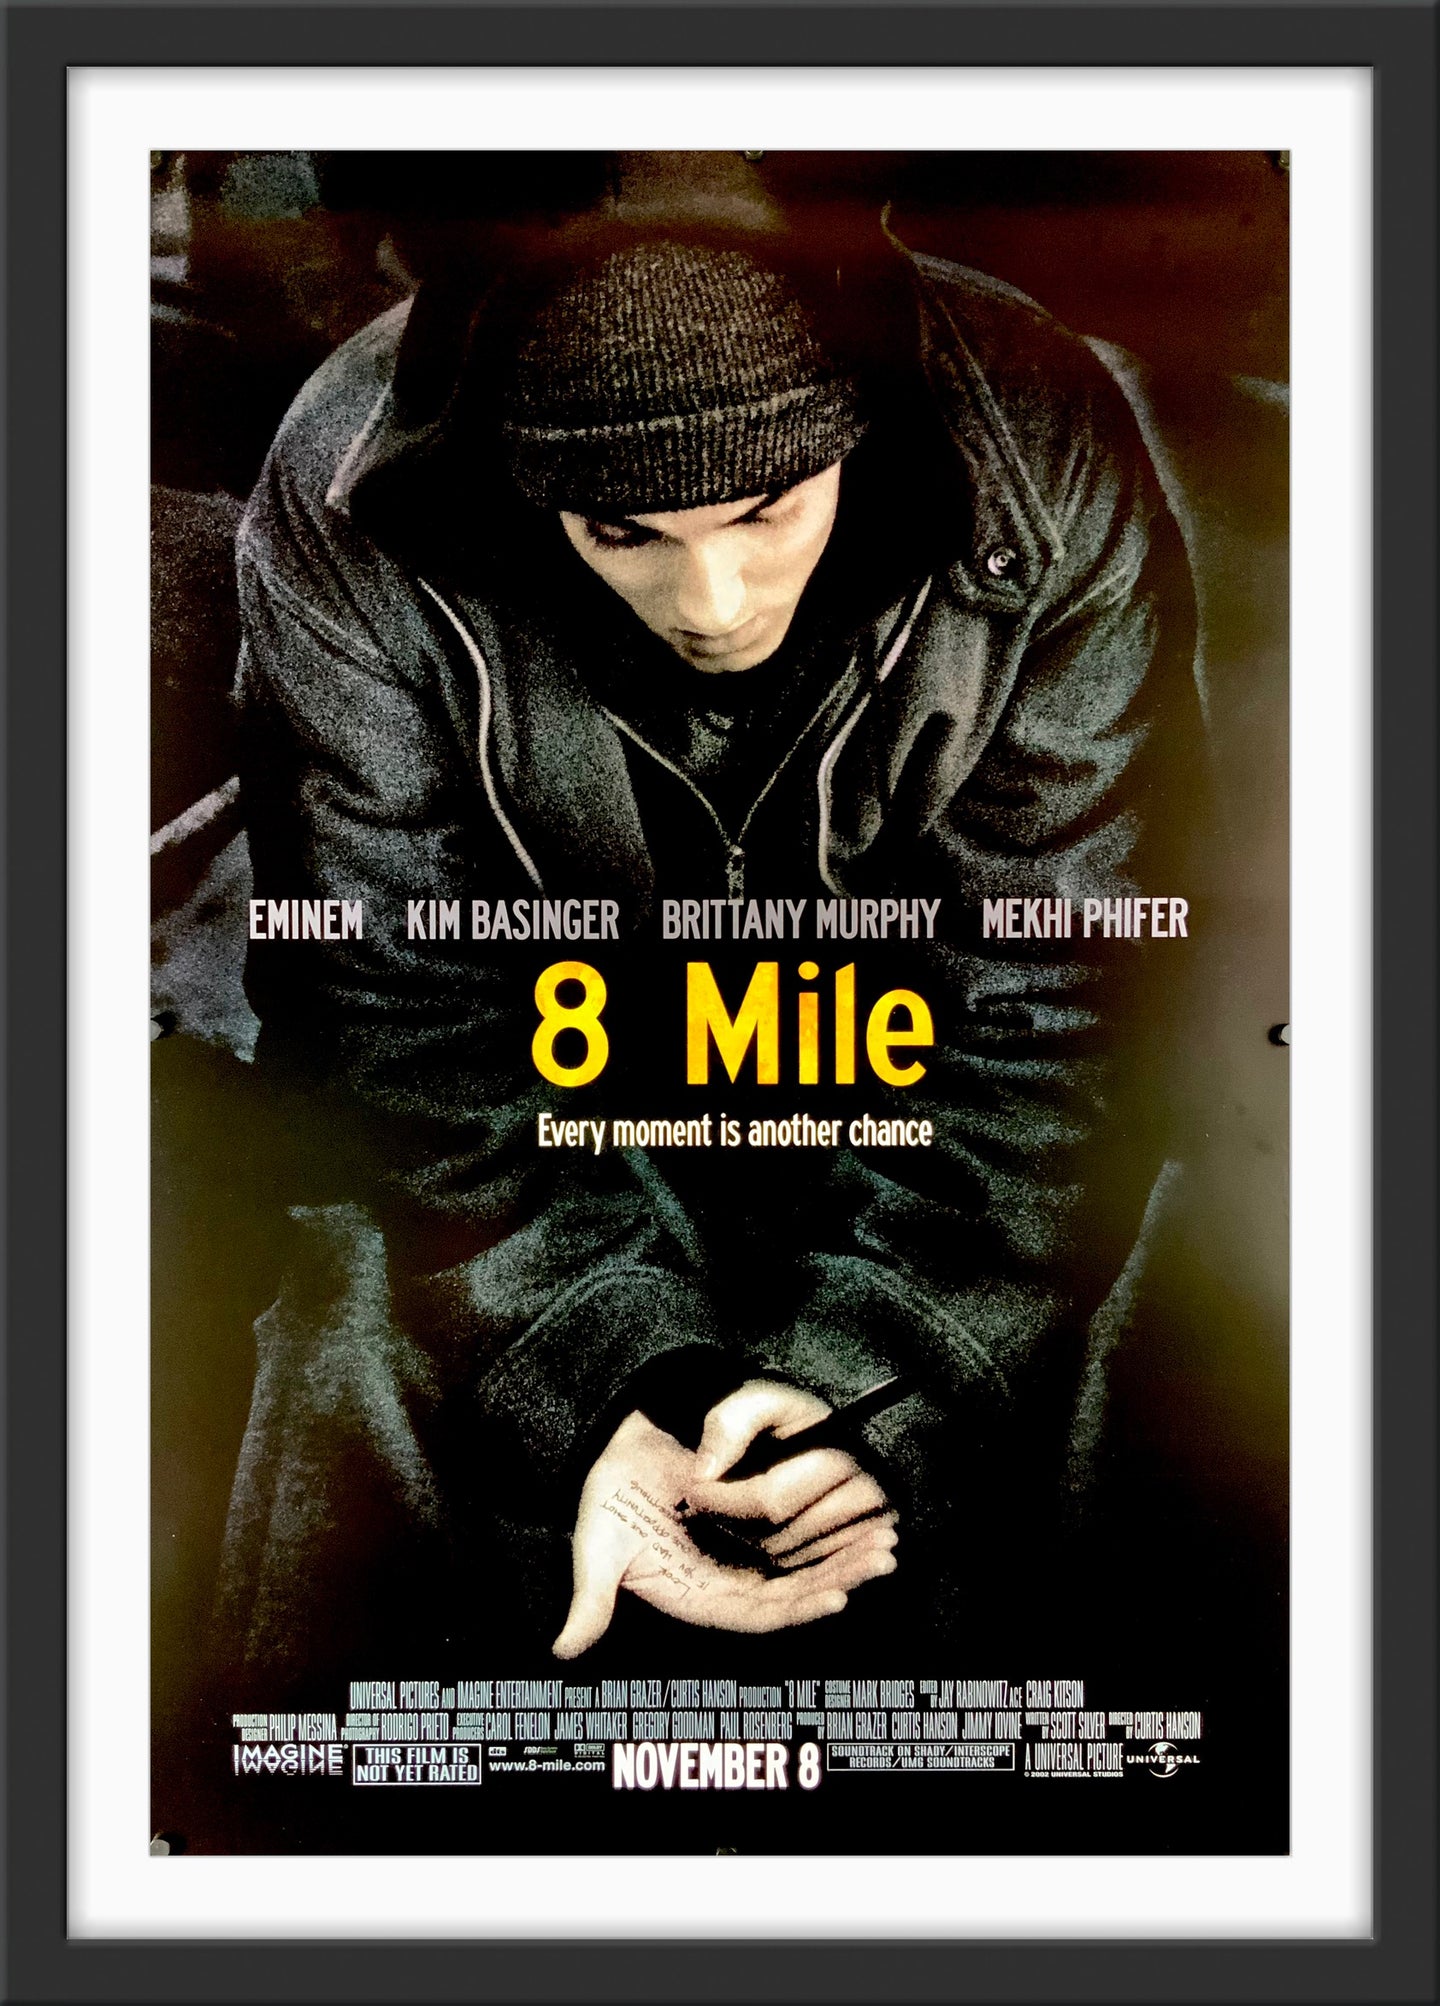 An original movie poster for the Eminem film 8 Mile